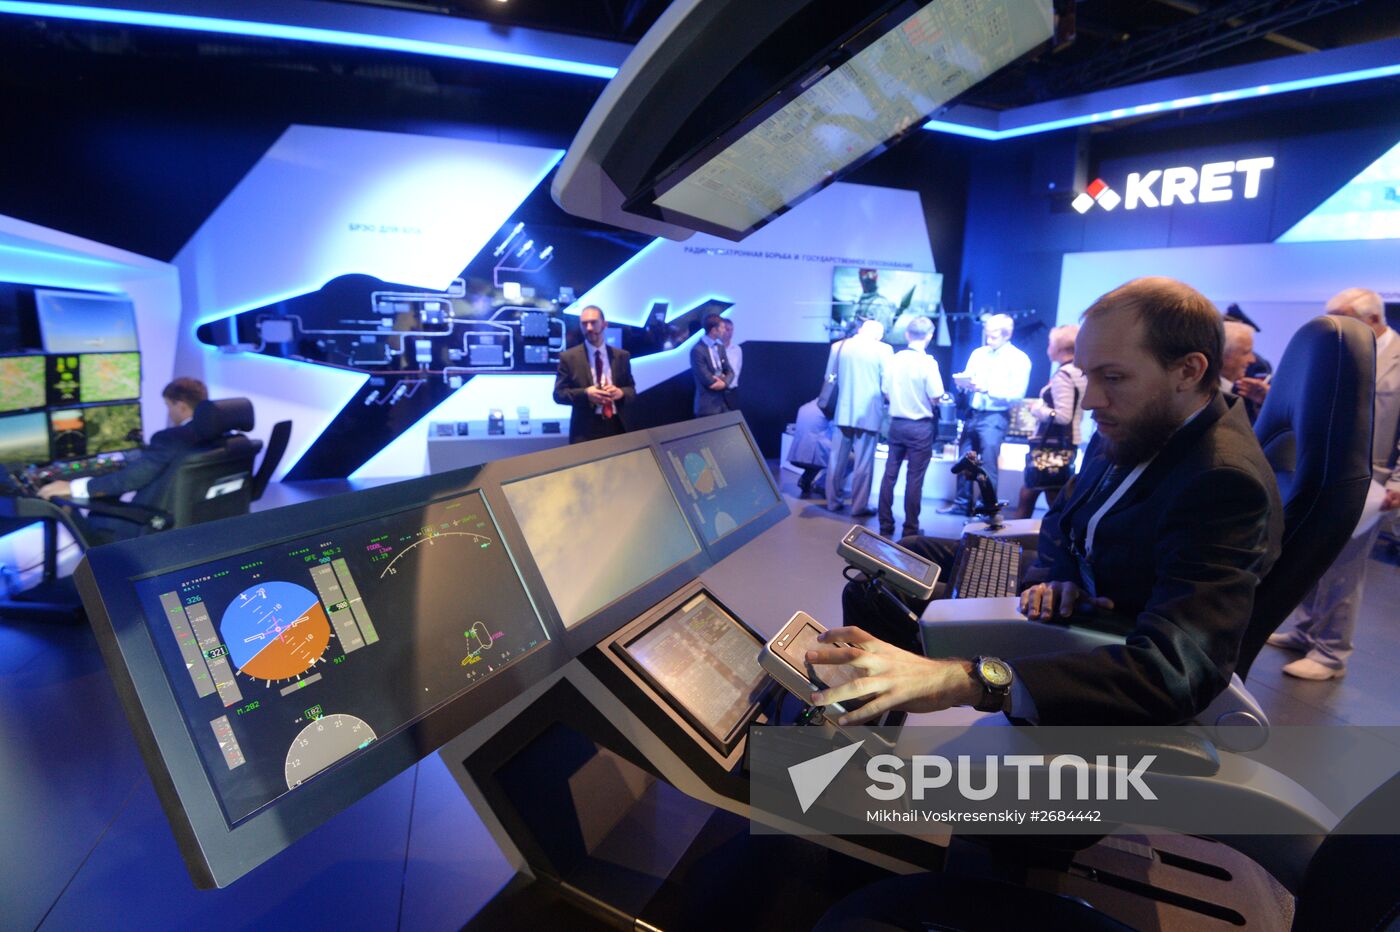 MAKS 2015 International Aviation and Space Salon opens in Zhukovsky